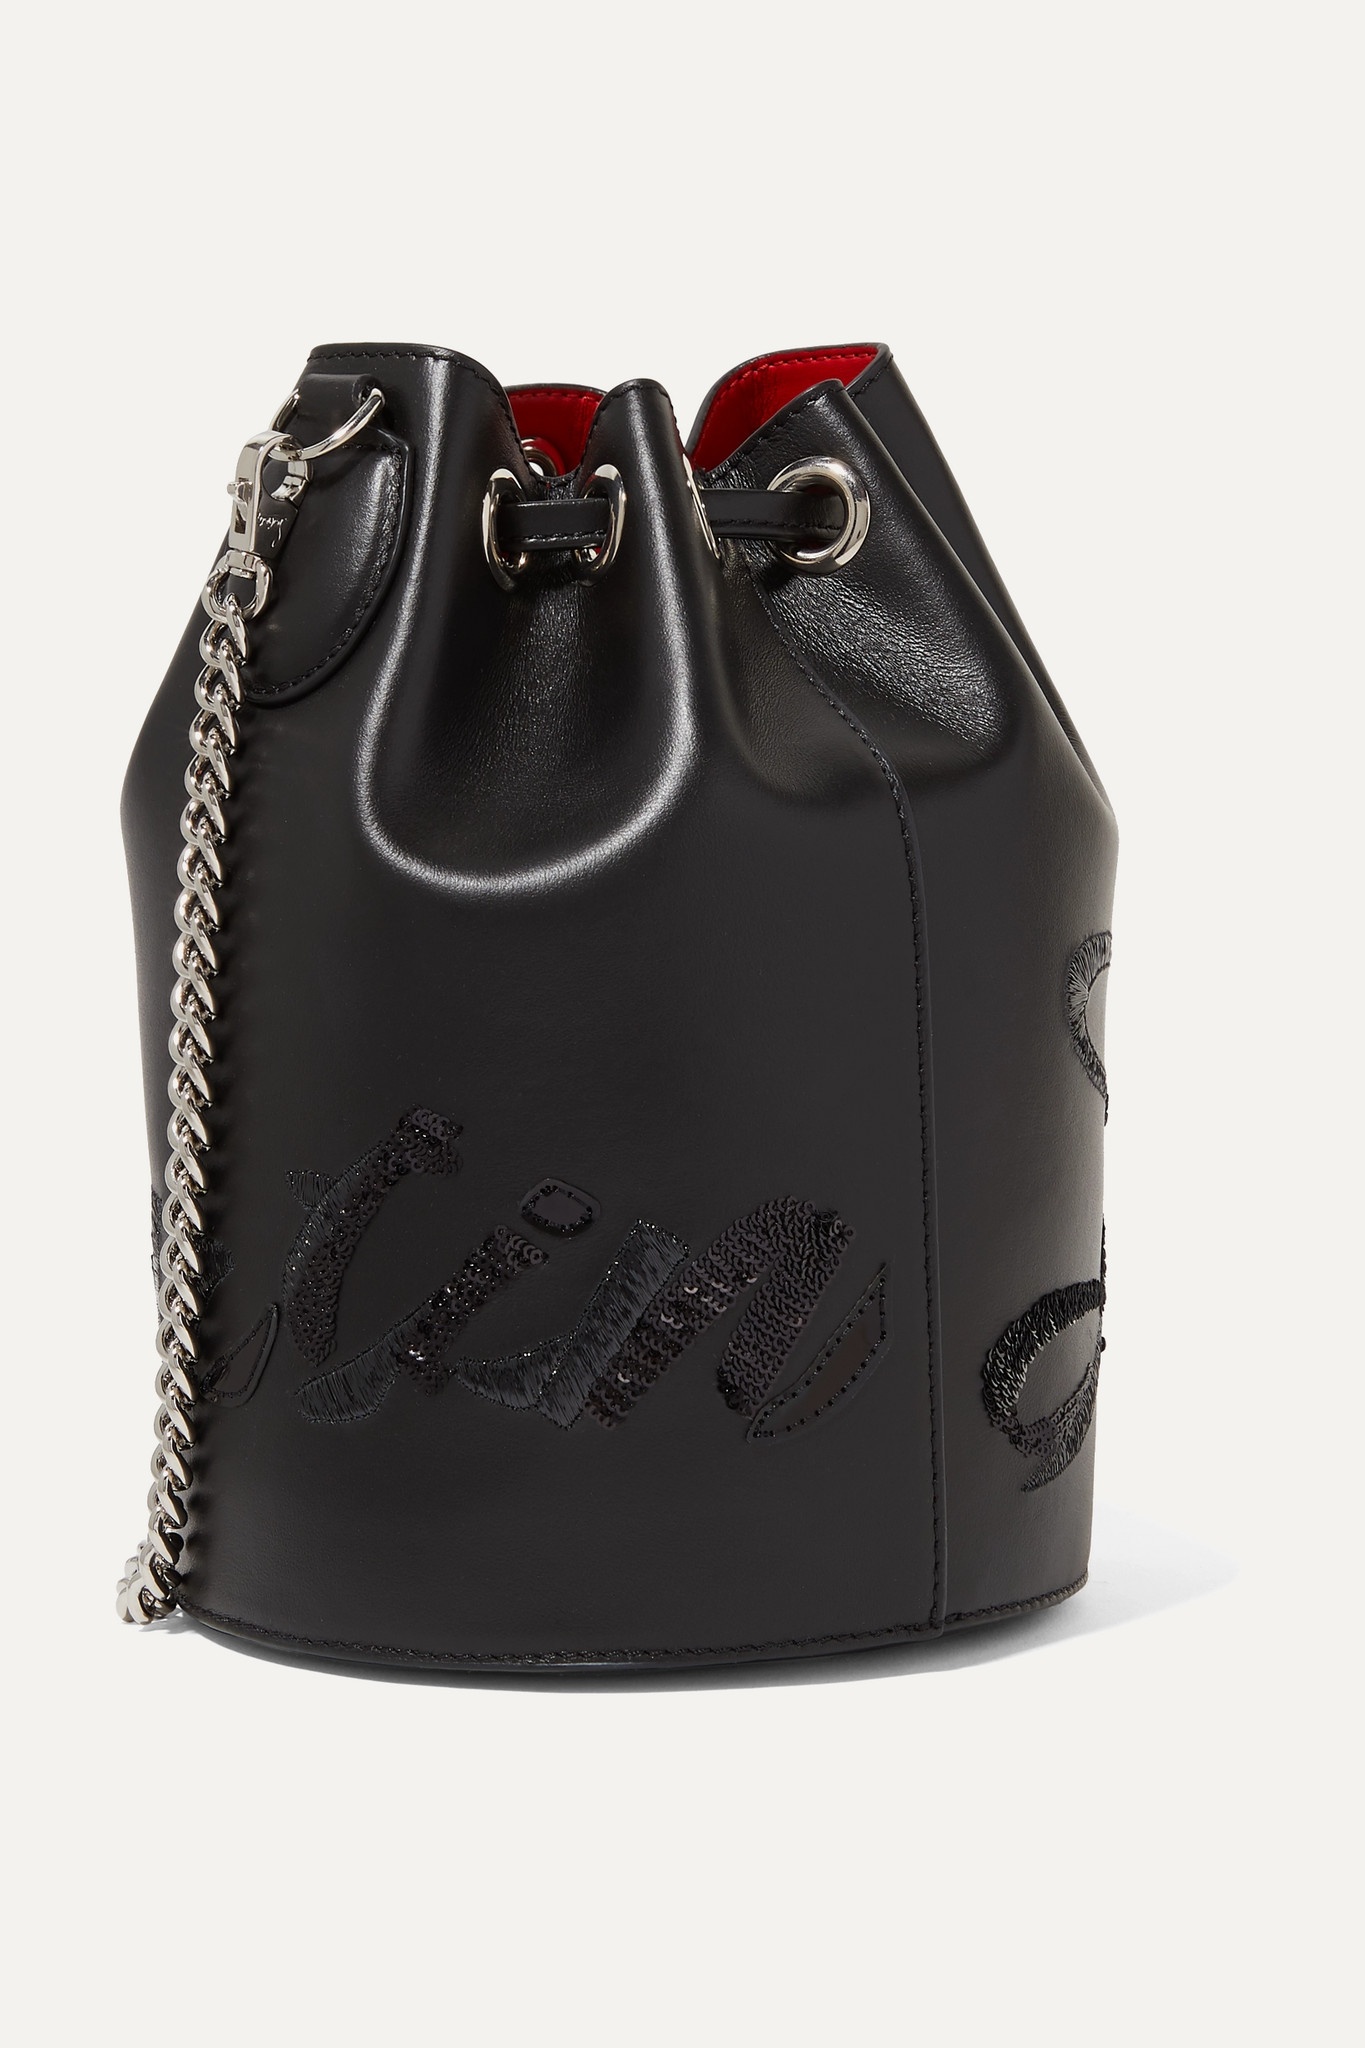 Marie Jane embellished leather bucket bag - 3